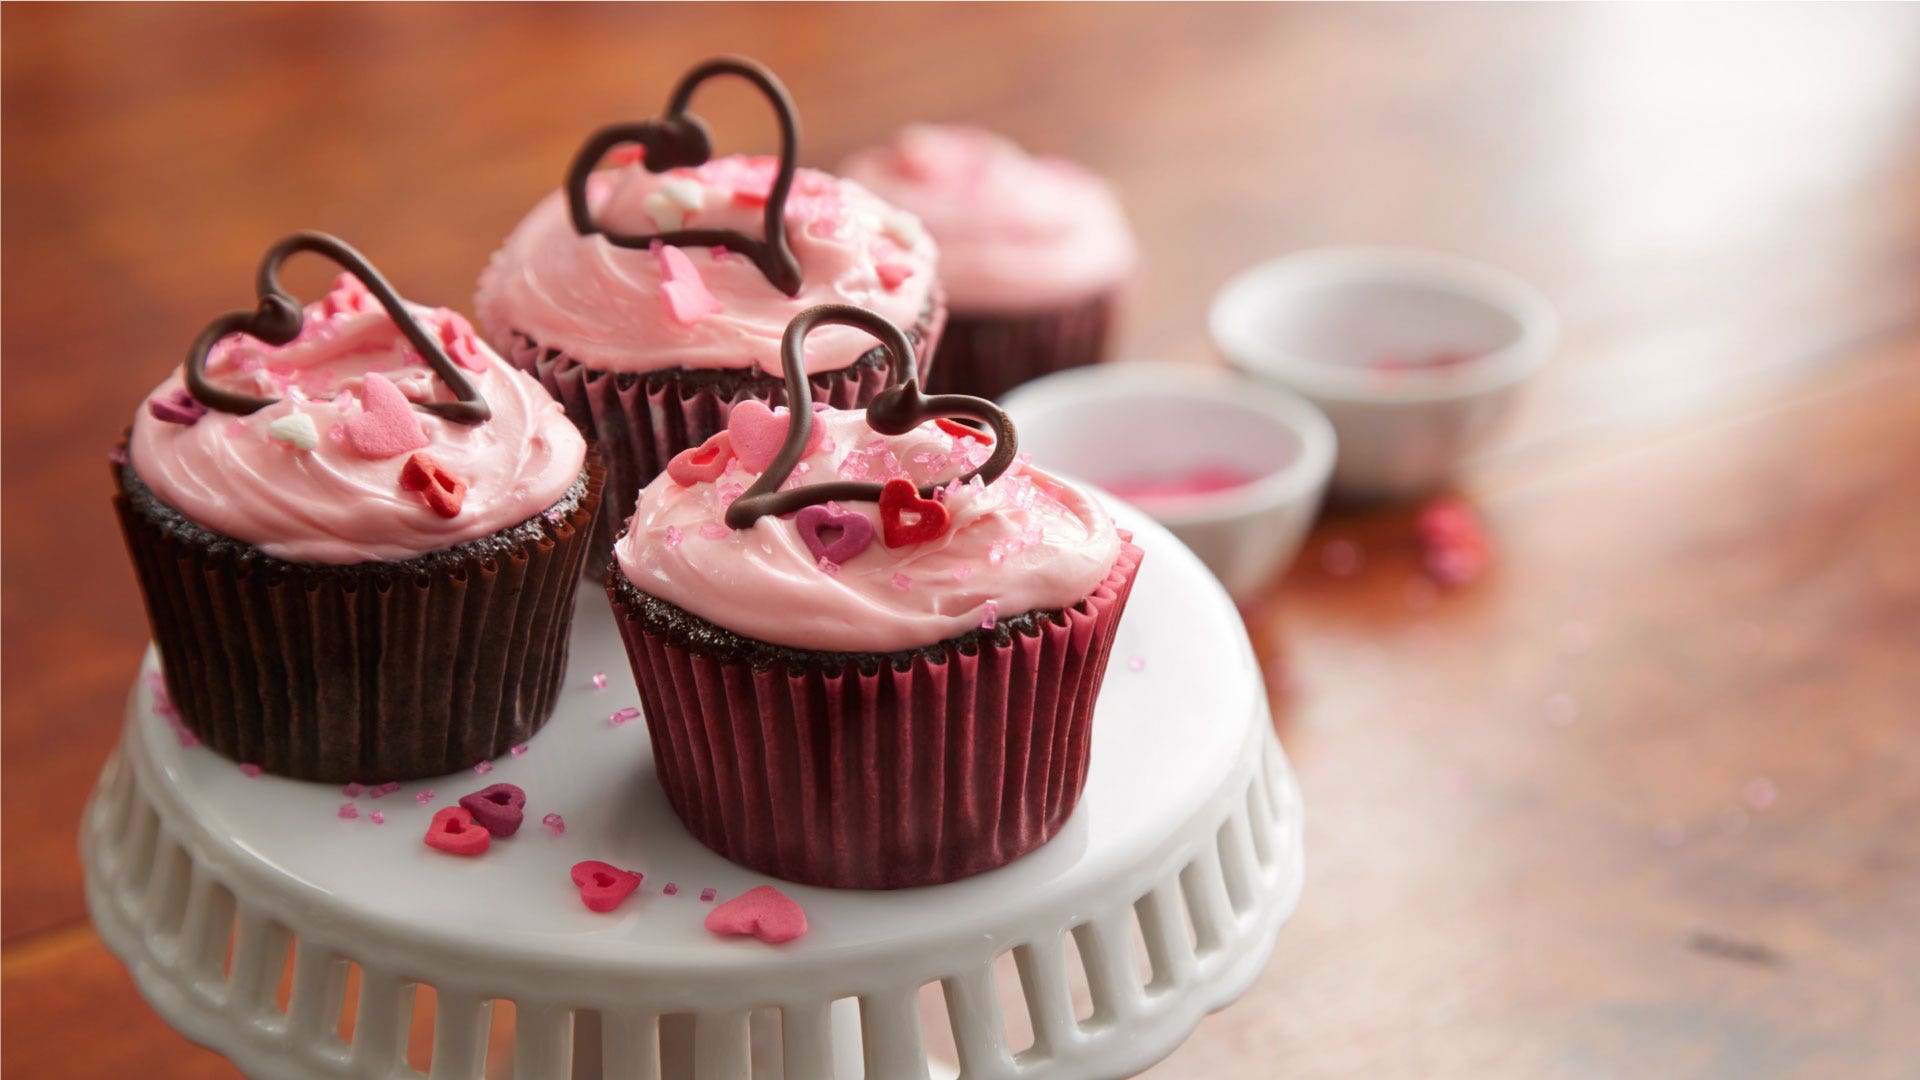 Sweetheart Chocolate Cupcakes | Recipes